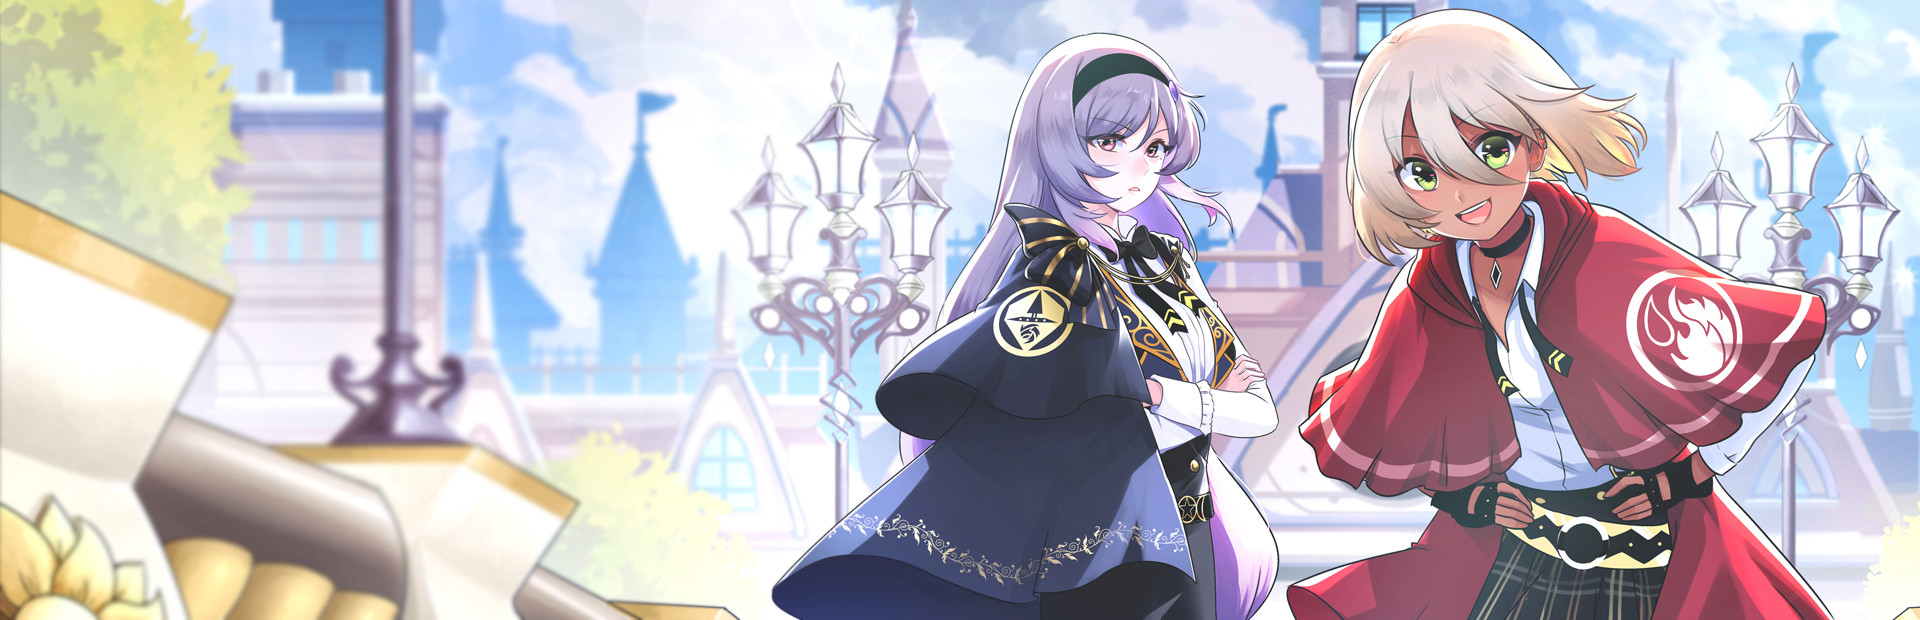 Perfect Gold - Yuri Visual Novel cover image